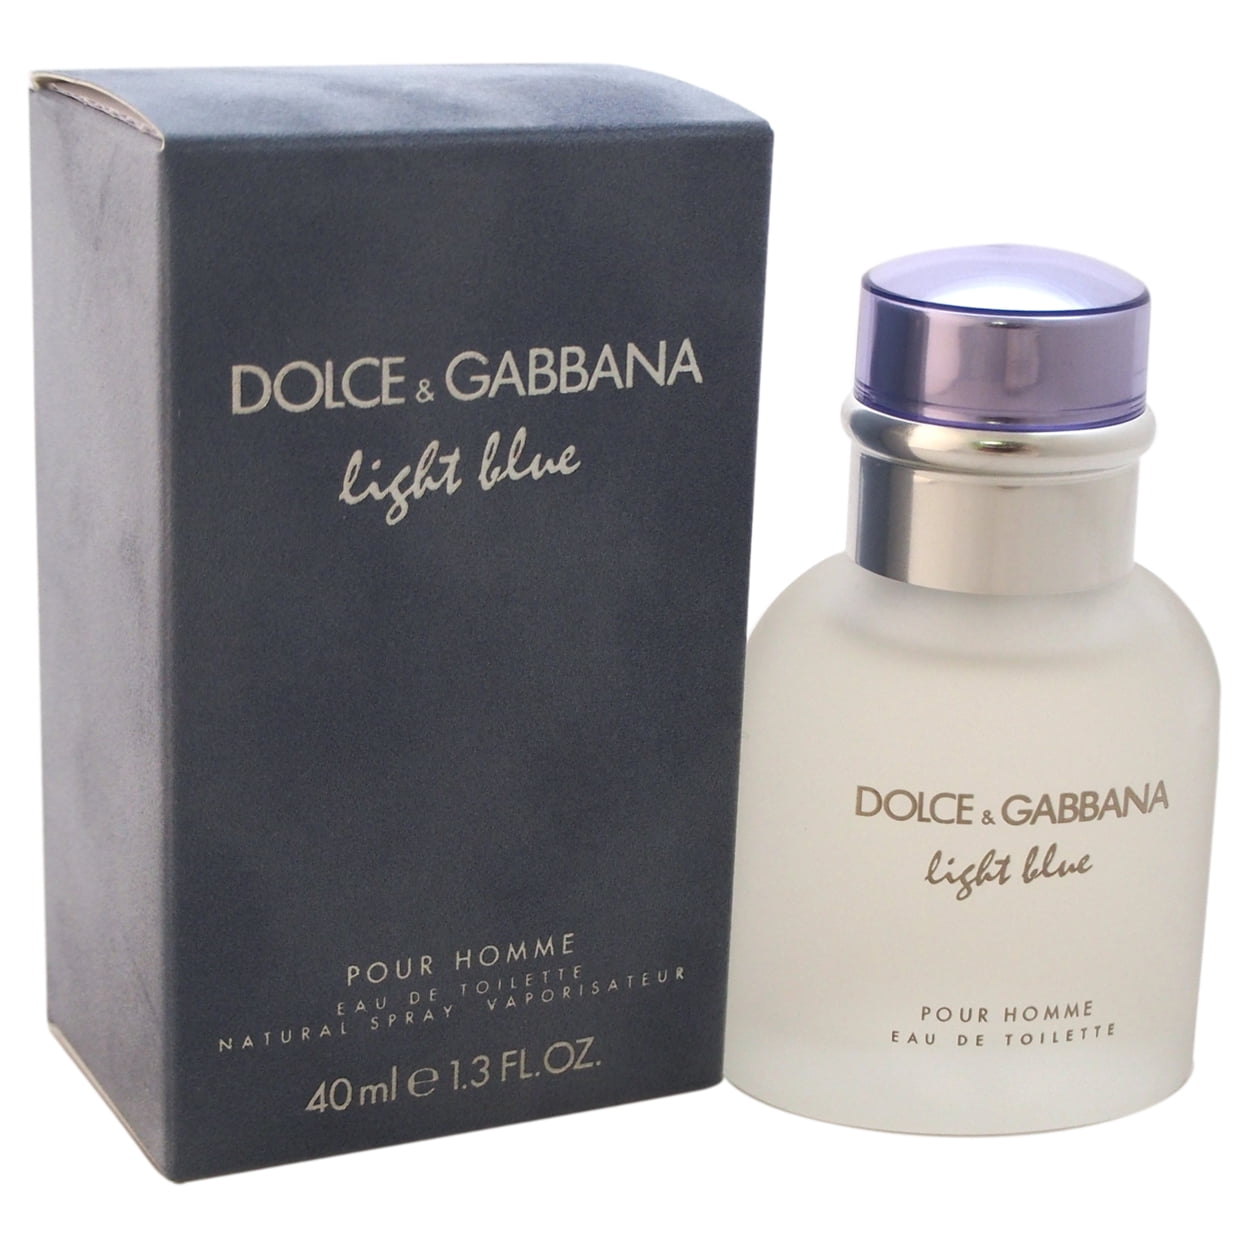 Dolce Gabbana Light Blue for men. Dolce Gabbana Light Blue 125ml. Dolce Gabbana Light Blue man. Dolce & Gabbana Light Blue 125 мл.